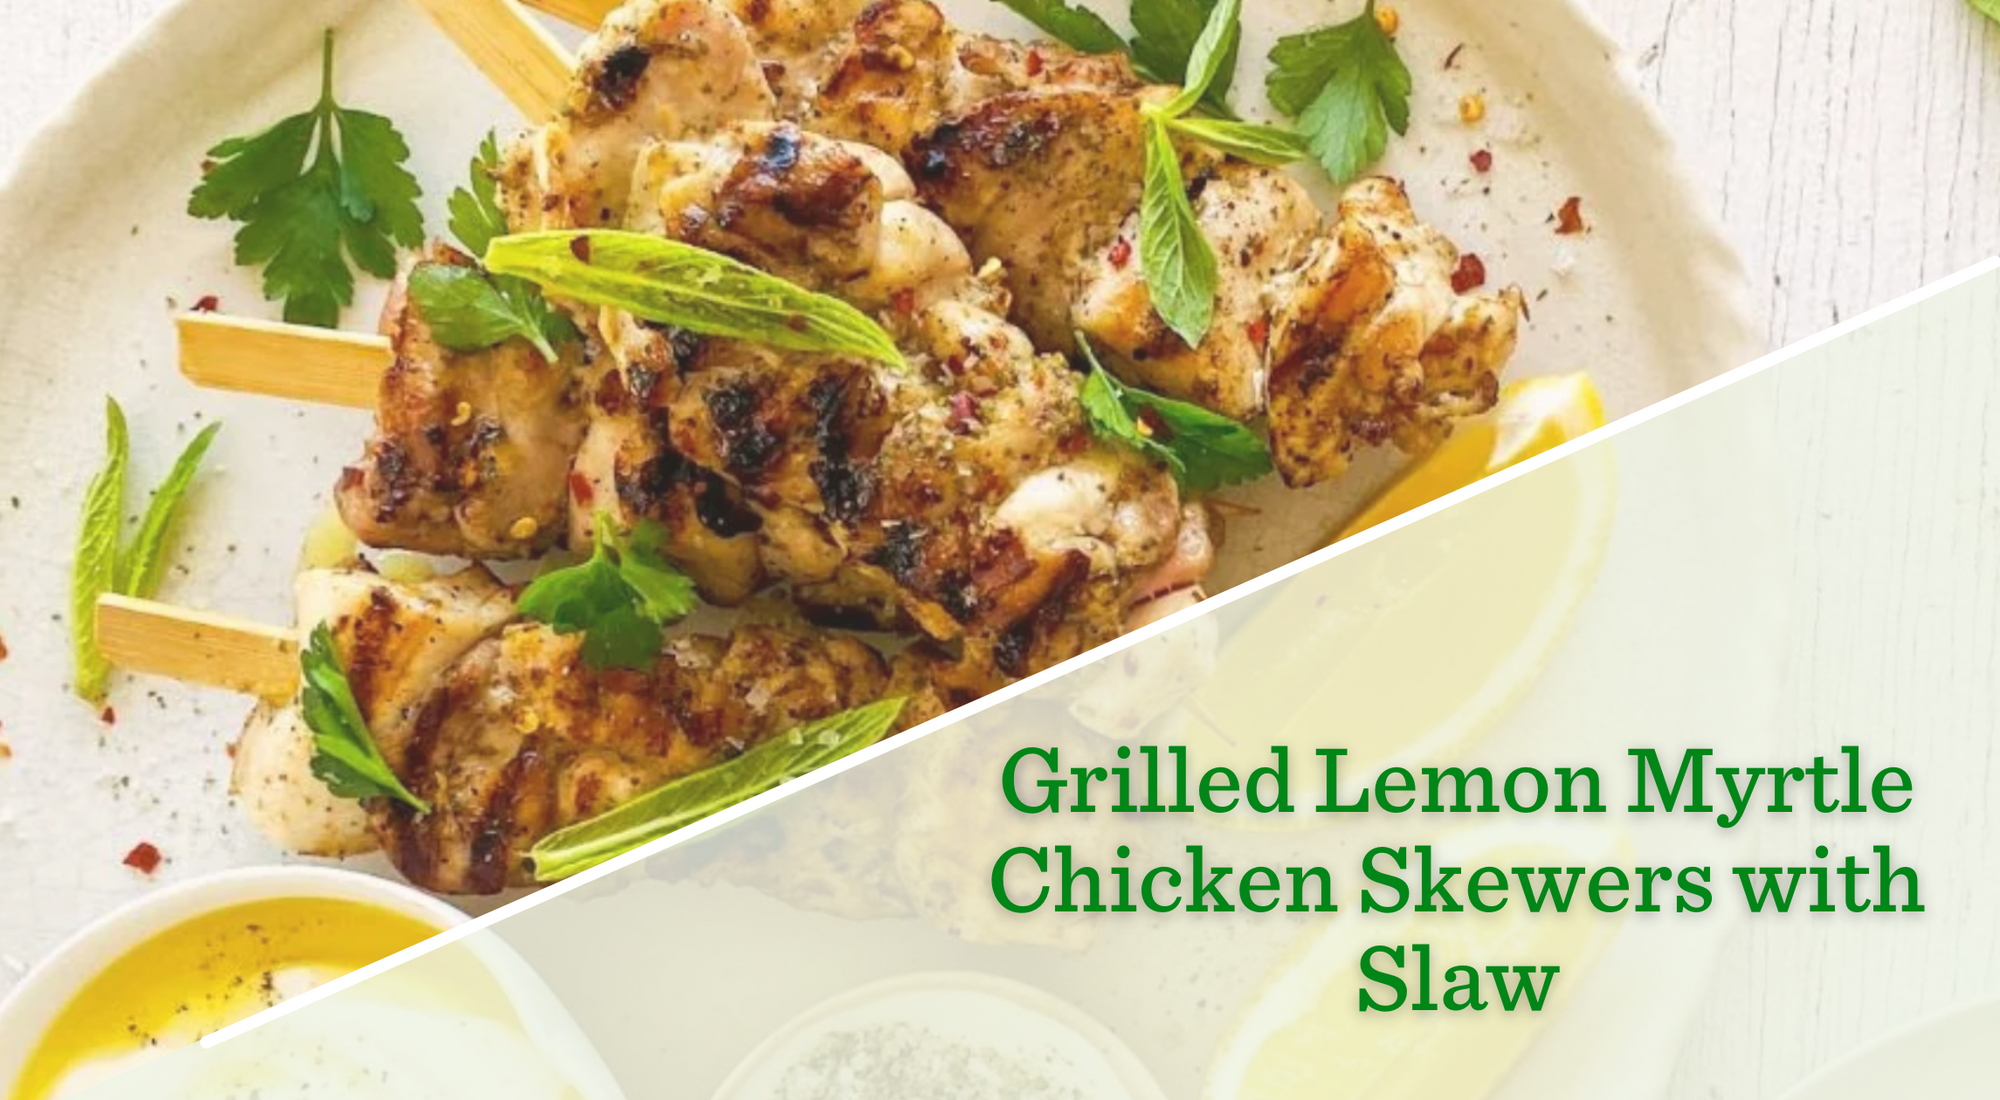 Grilled Lemon Myrtle Chicken Skewers